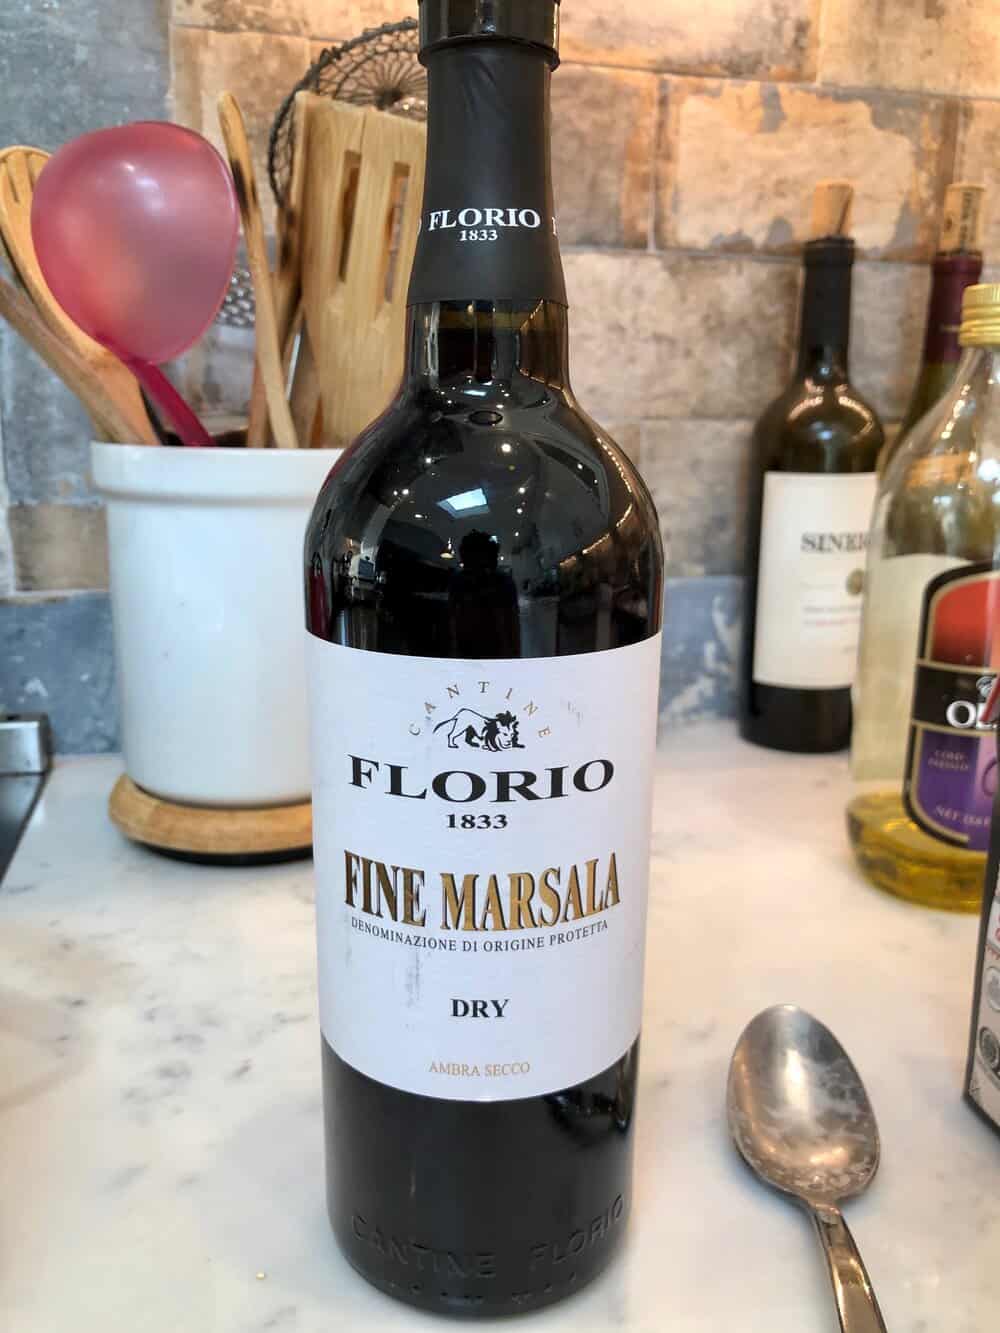 Florio fine marsala dry wine